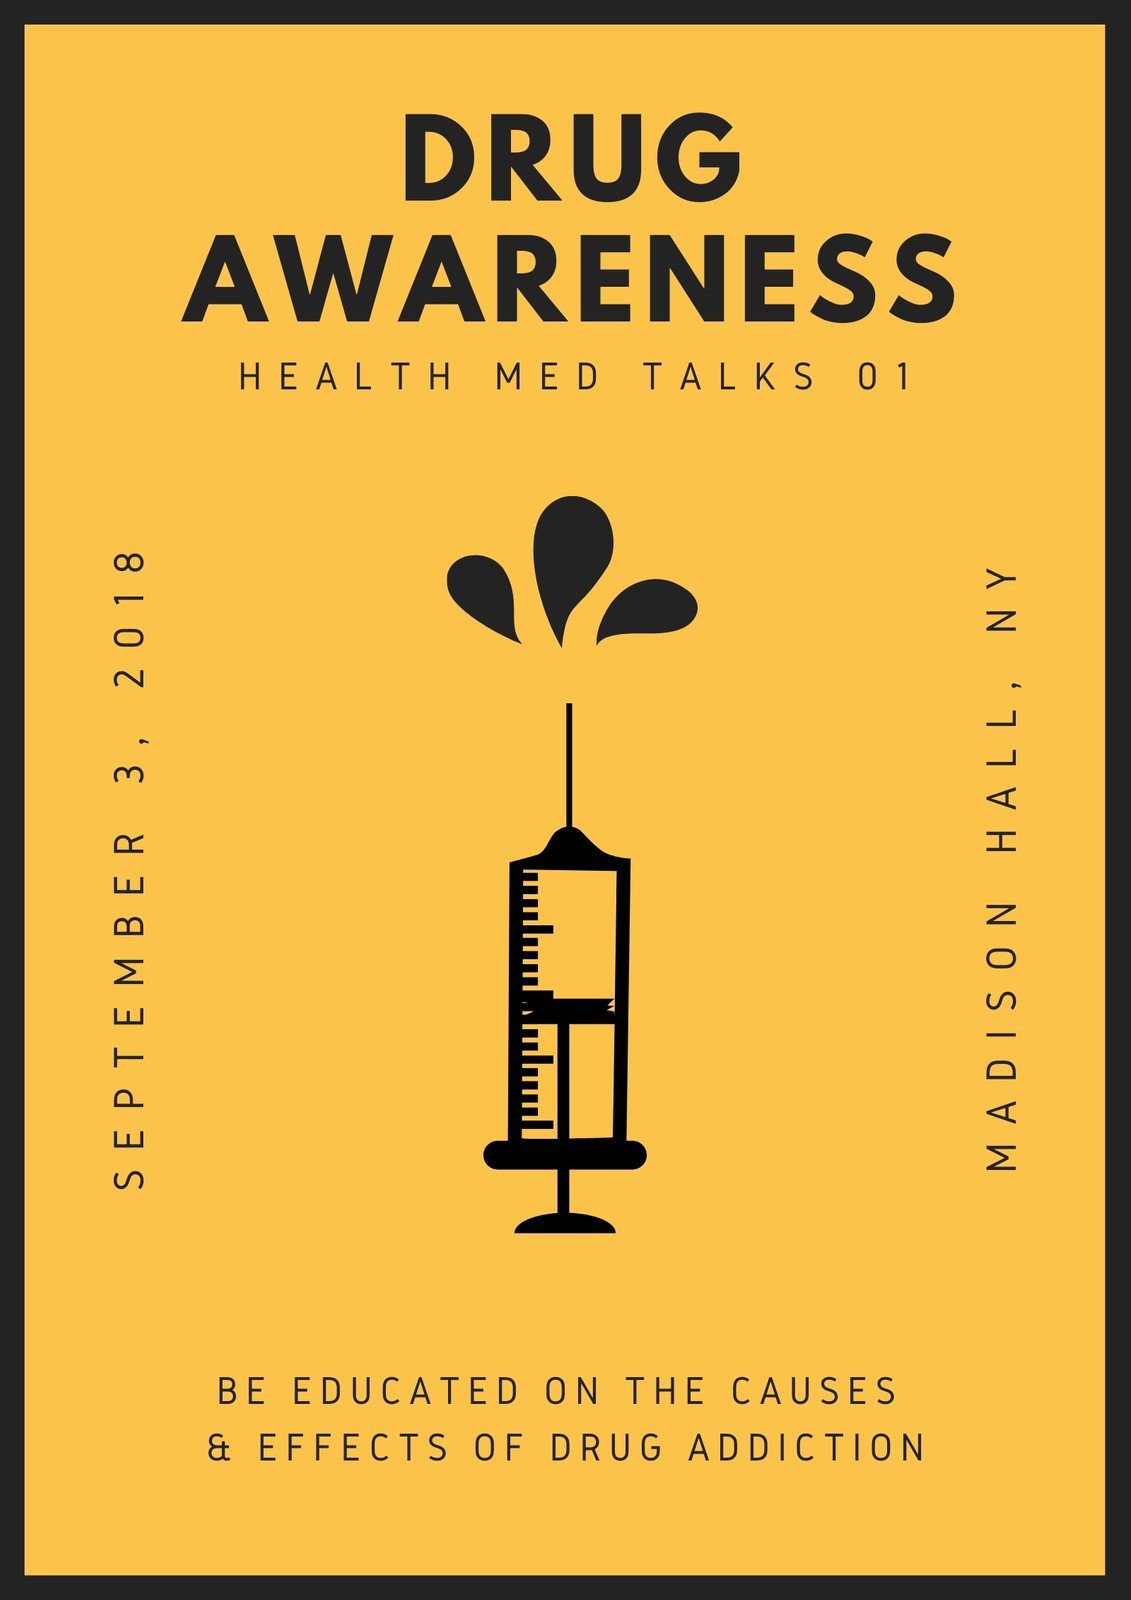 free-printable-custom-drug-awareness-poster-templates-canva